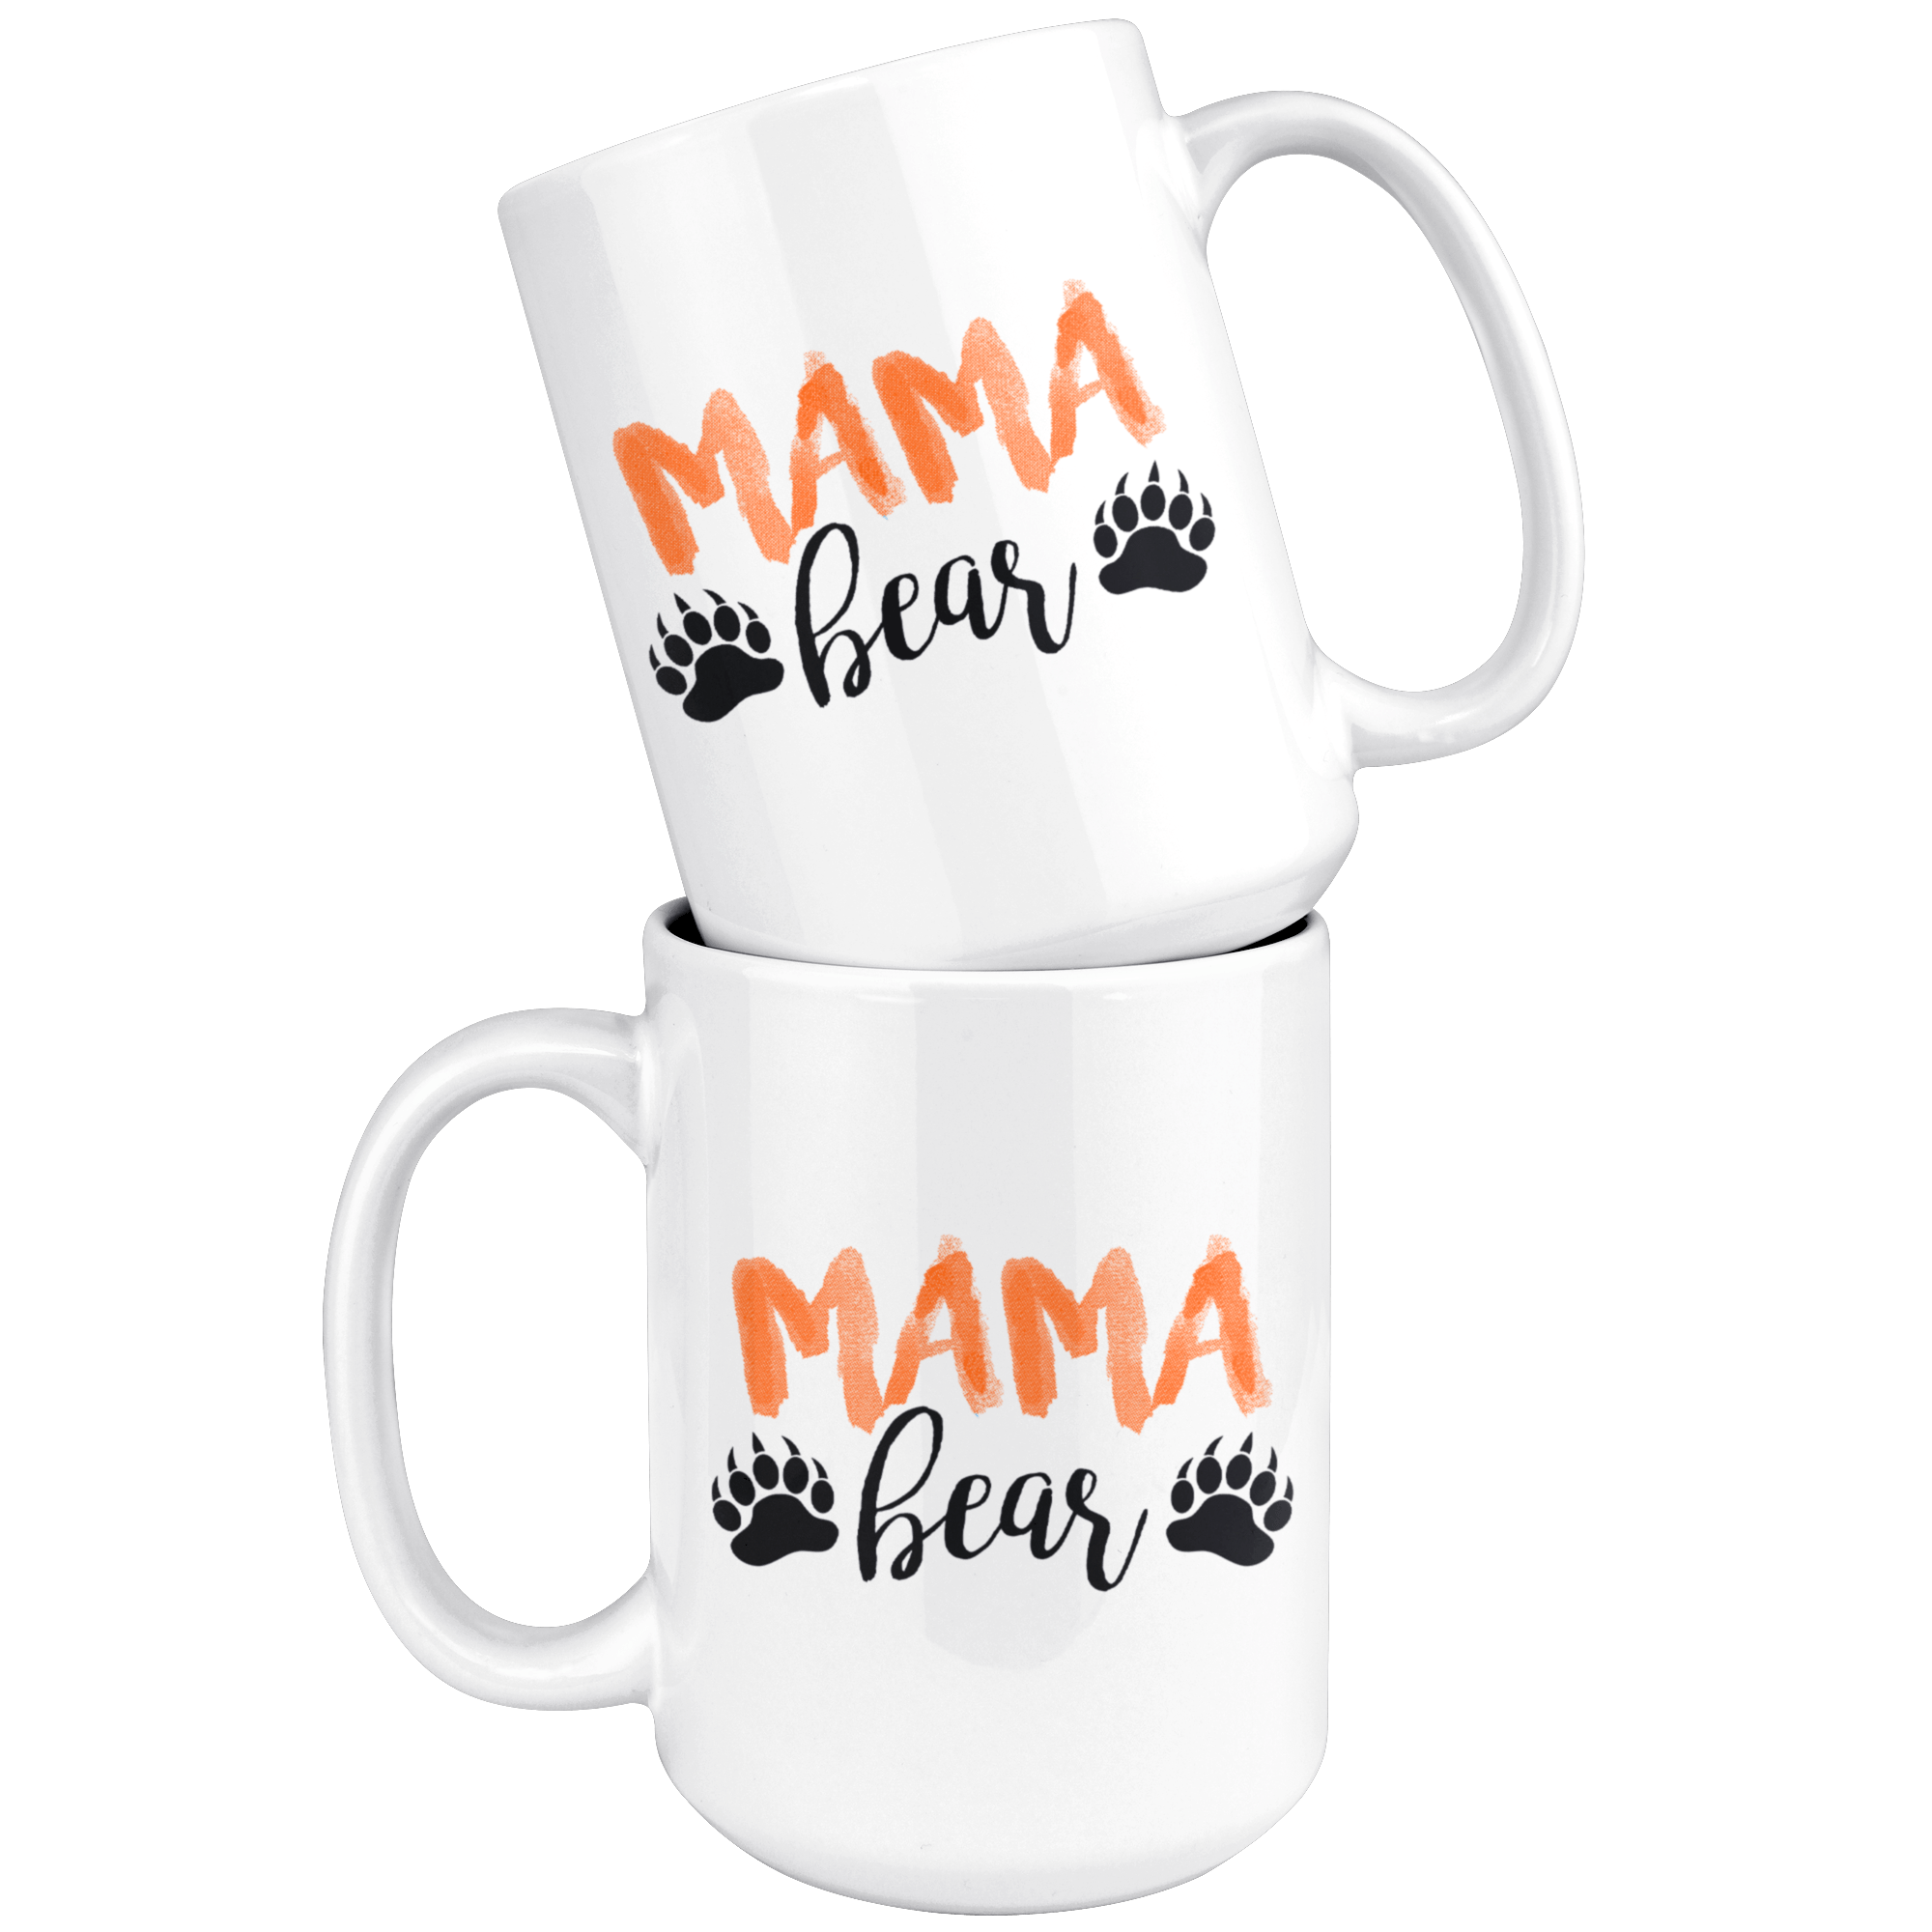 Mother's Day Gift Set] ~ Hydro Flask Mug & Hippopotamus Chief Bear